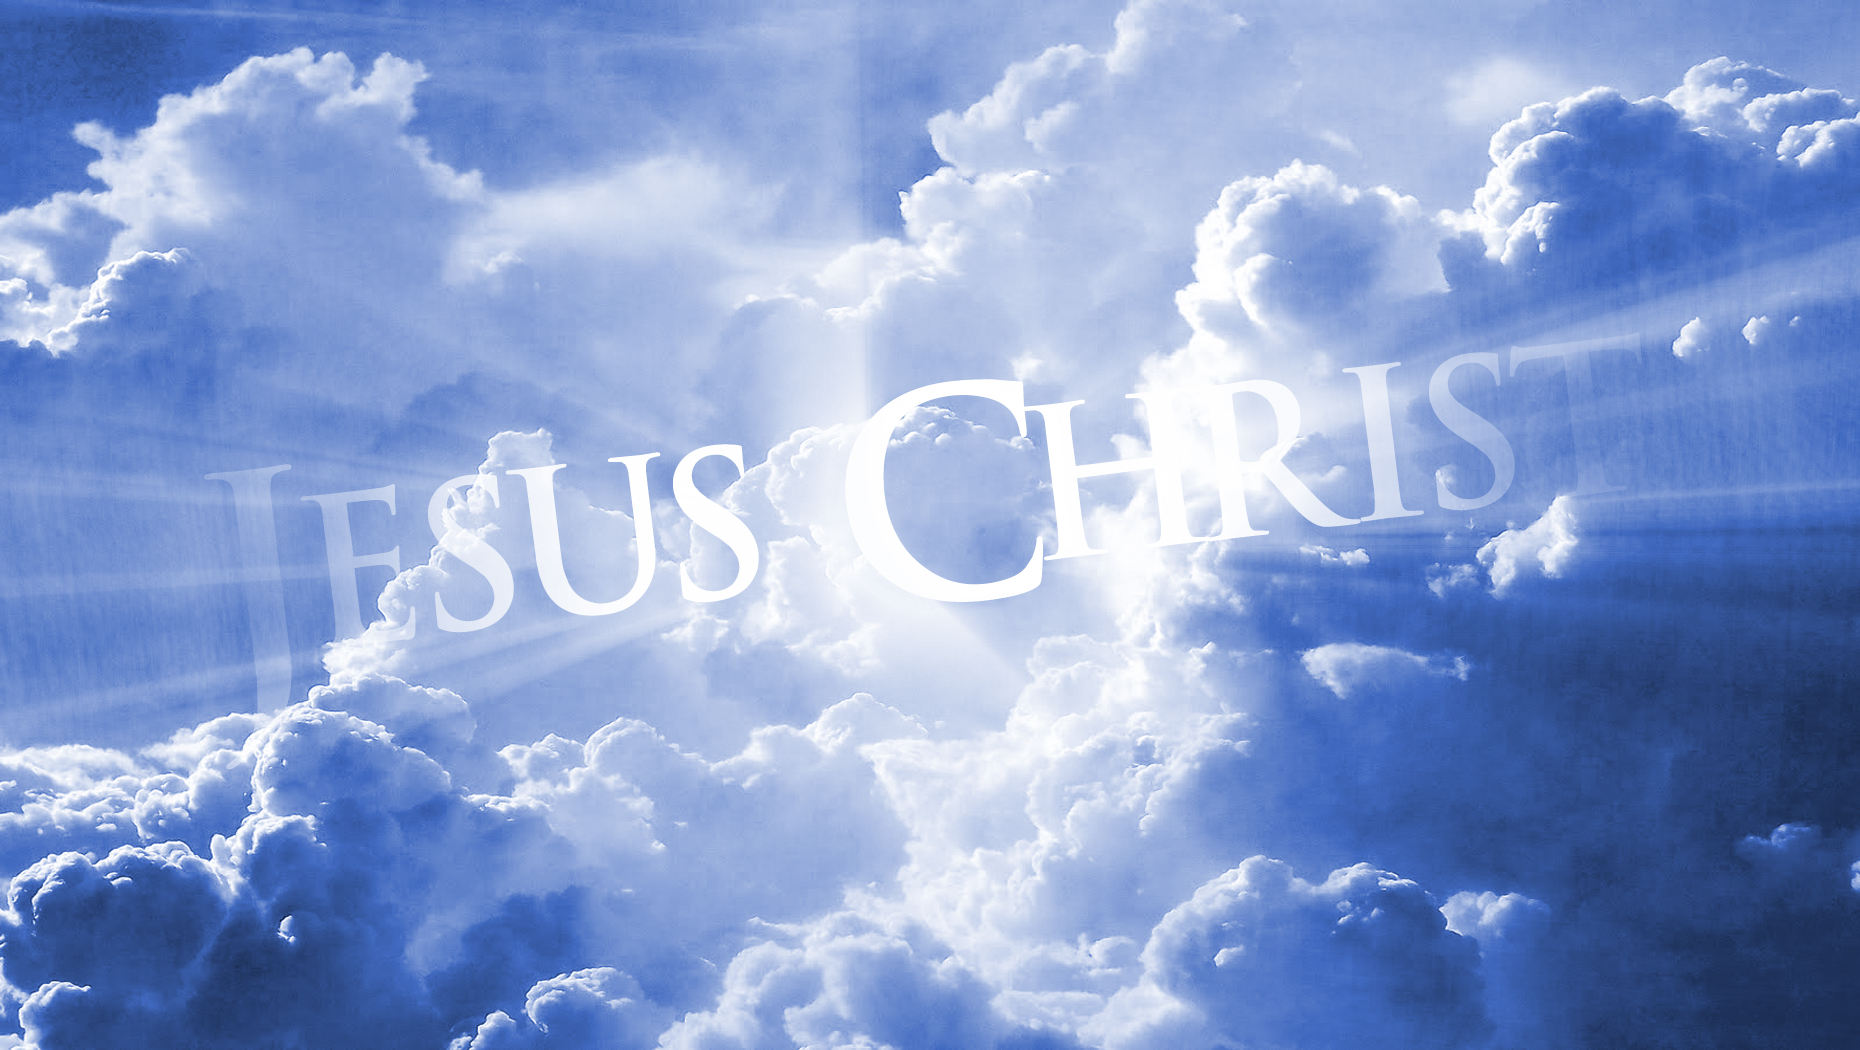 Jesus Christ In Heaven Wallpaper Christian